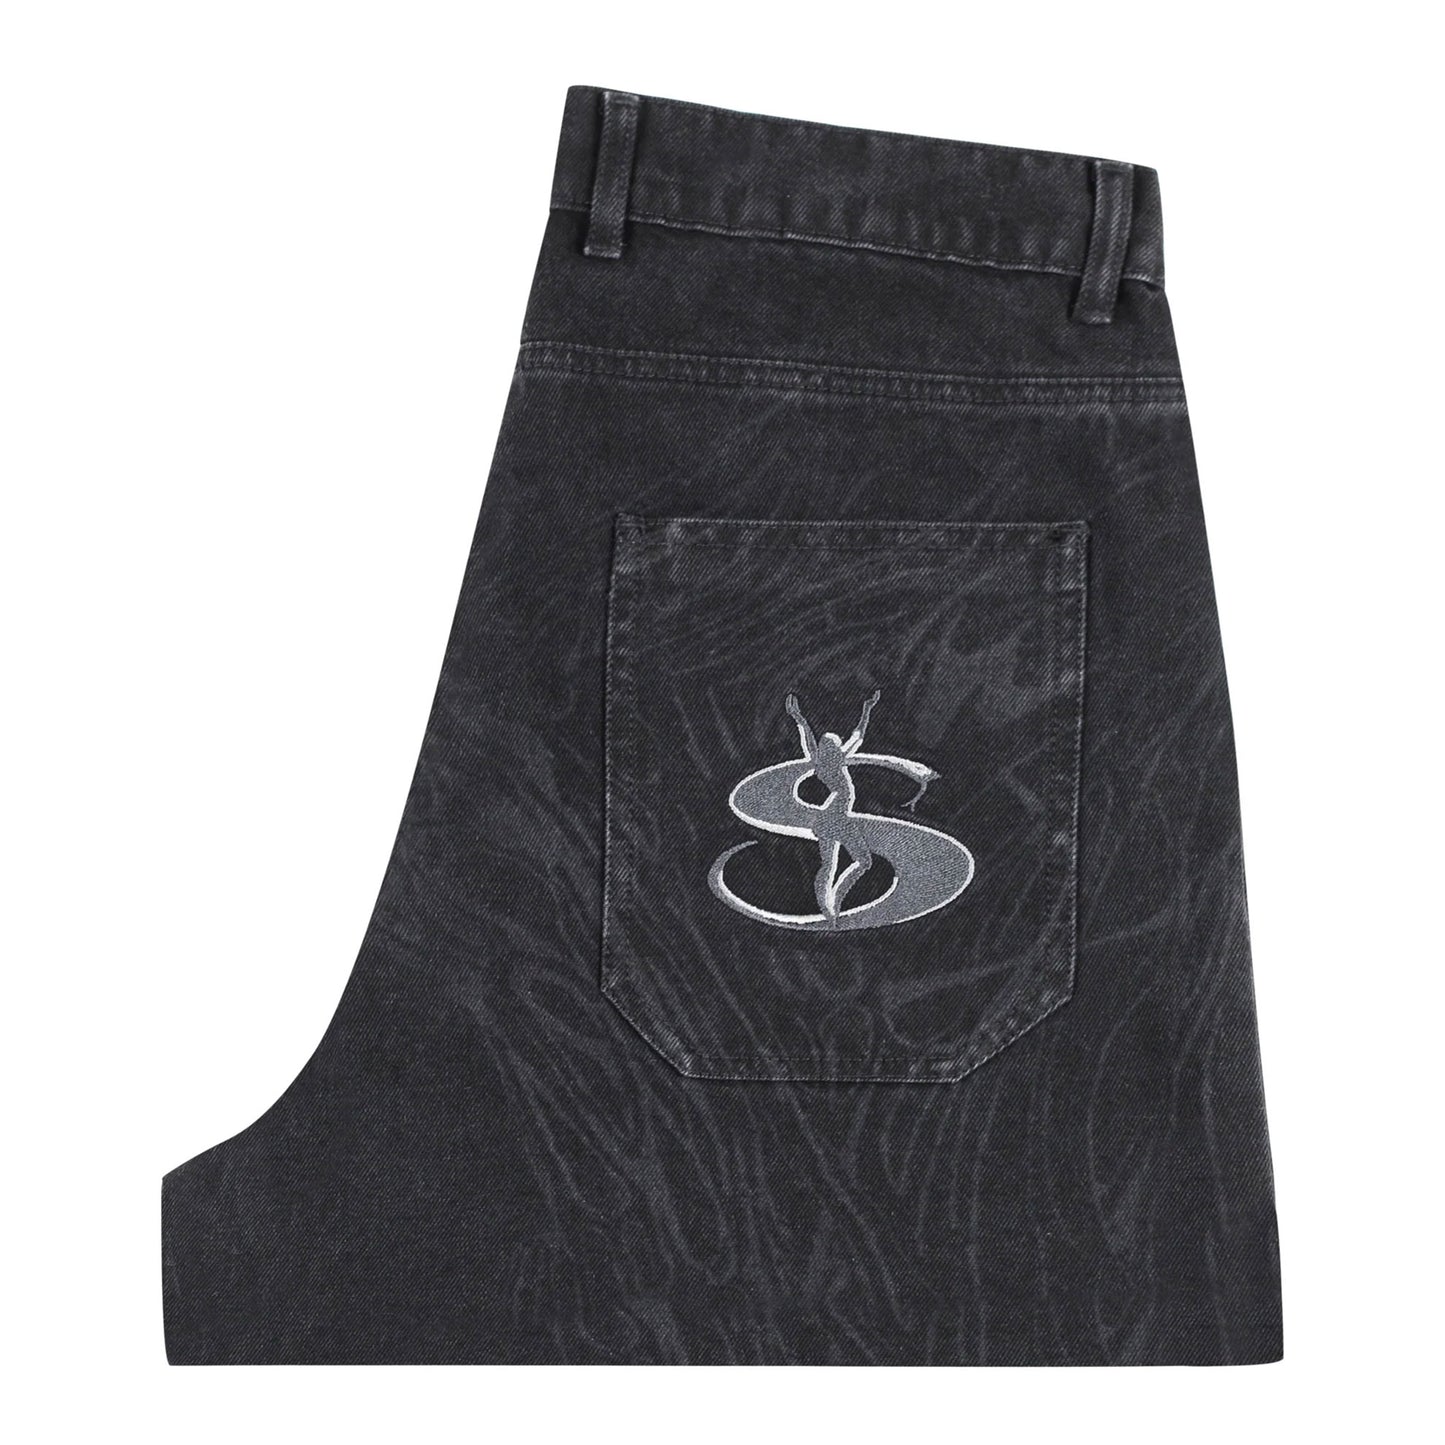 Yardsale Phantasy Jeans black S 男女兼用80センチです